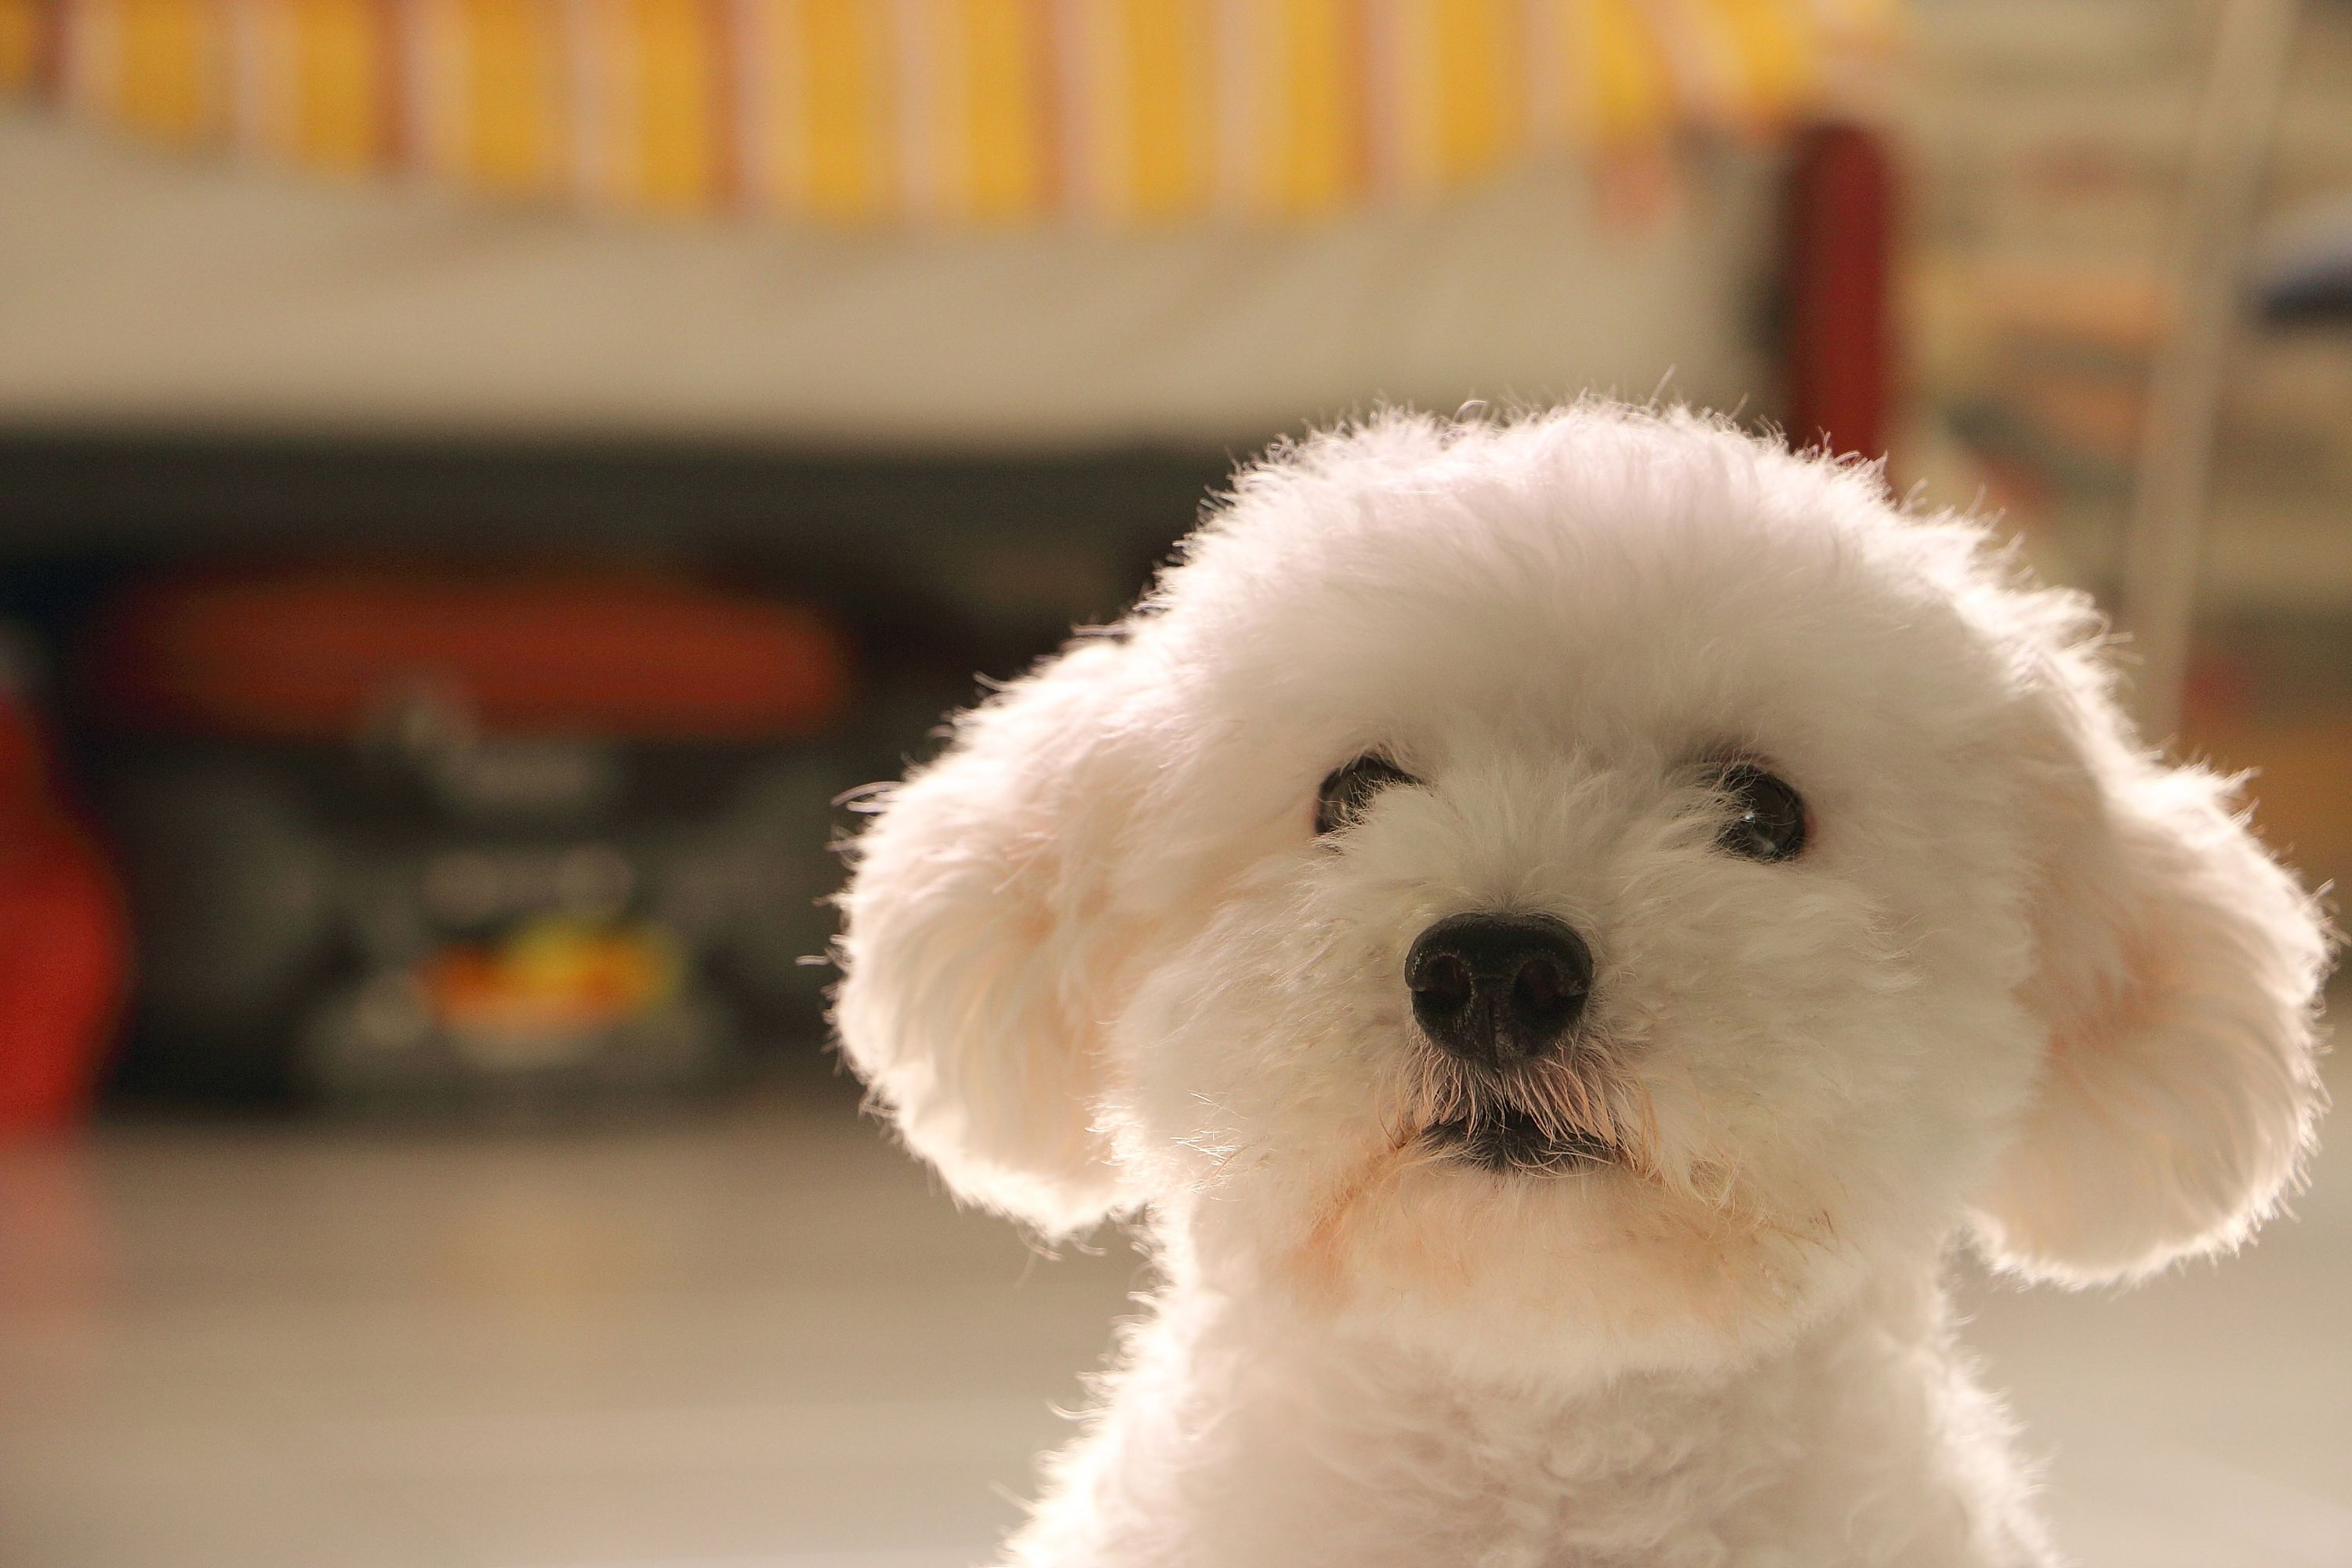 small white teddy bear dog